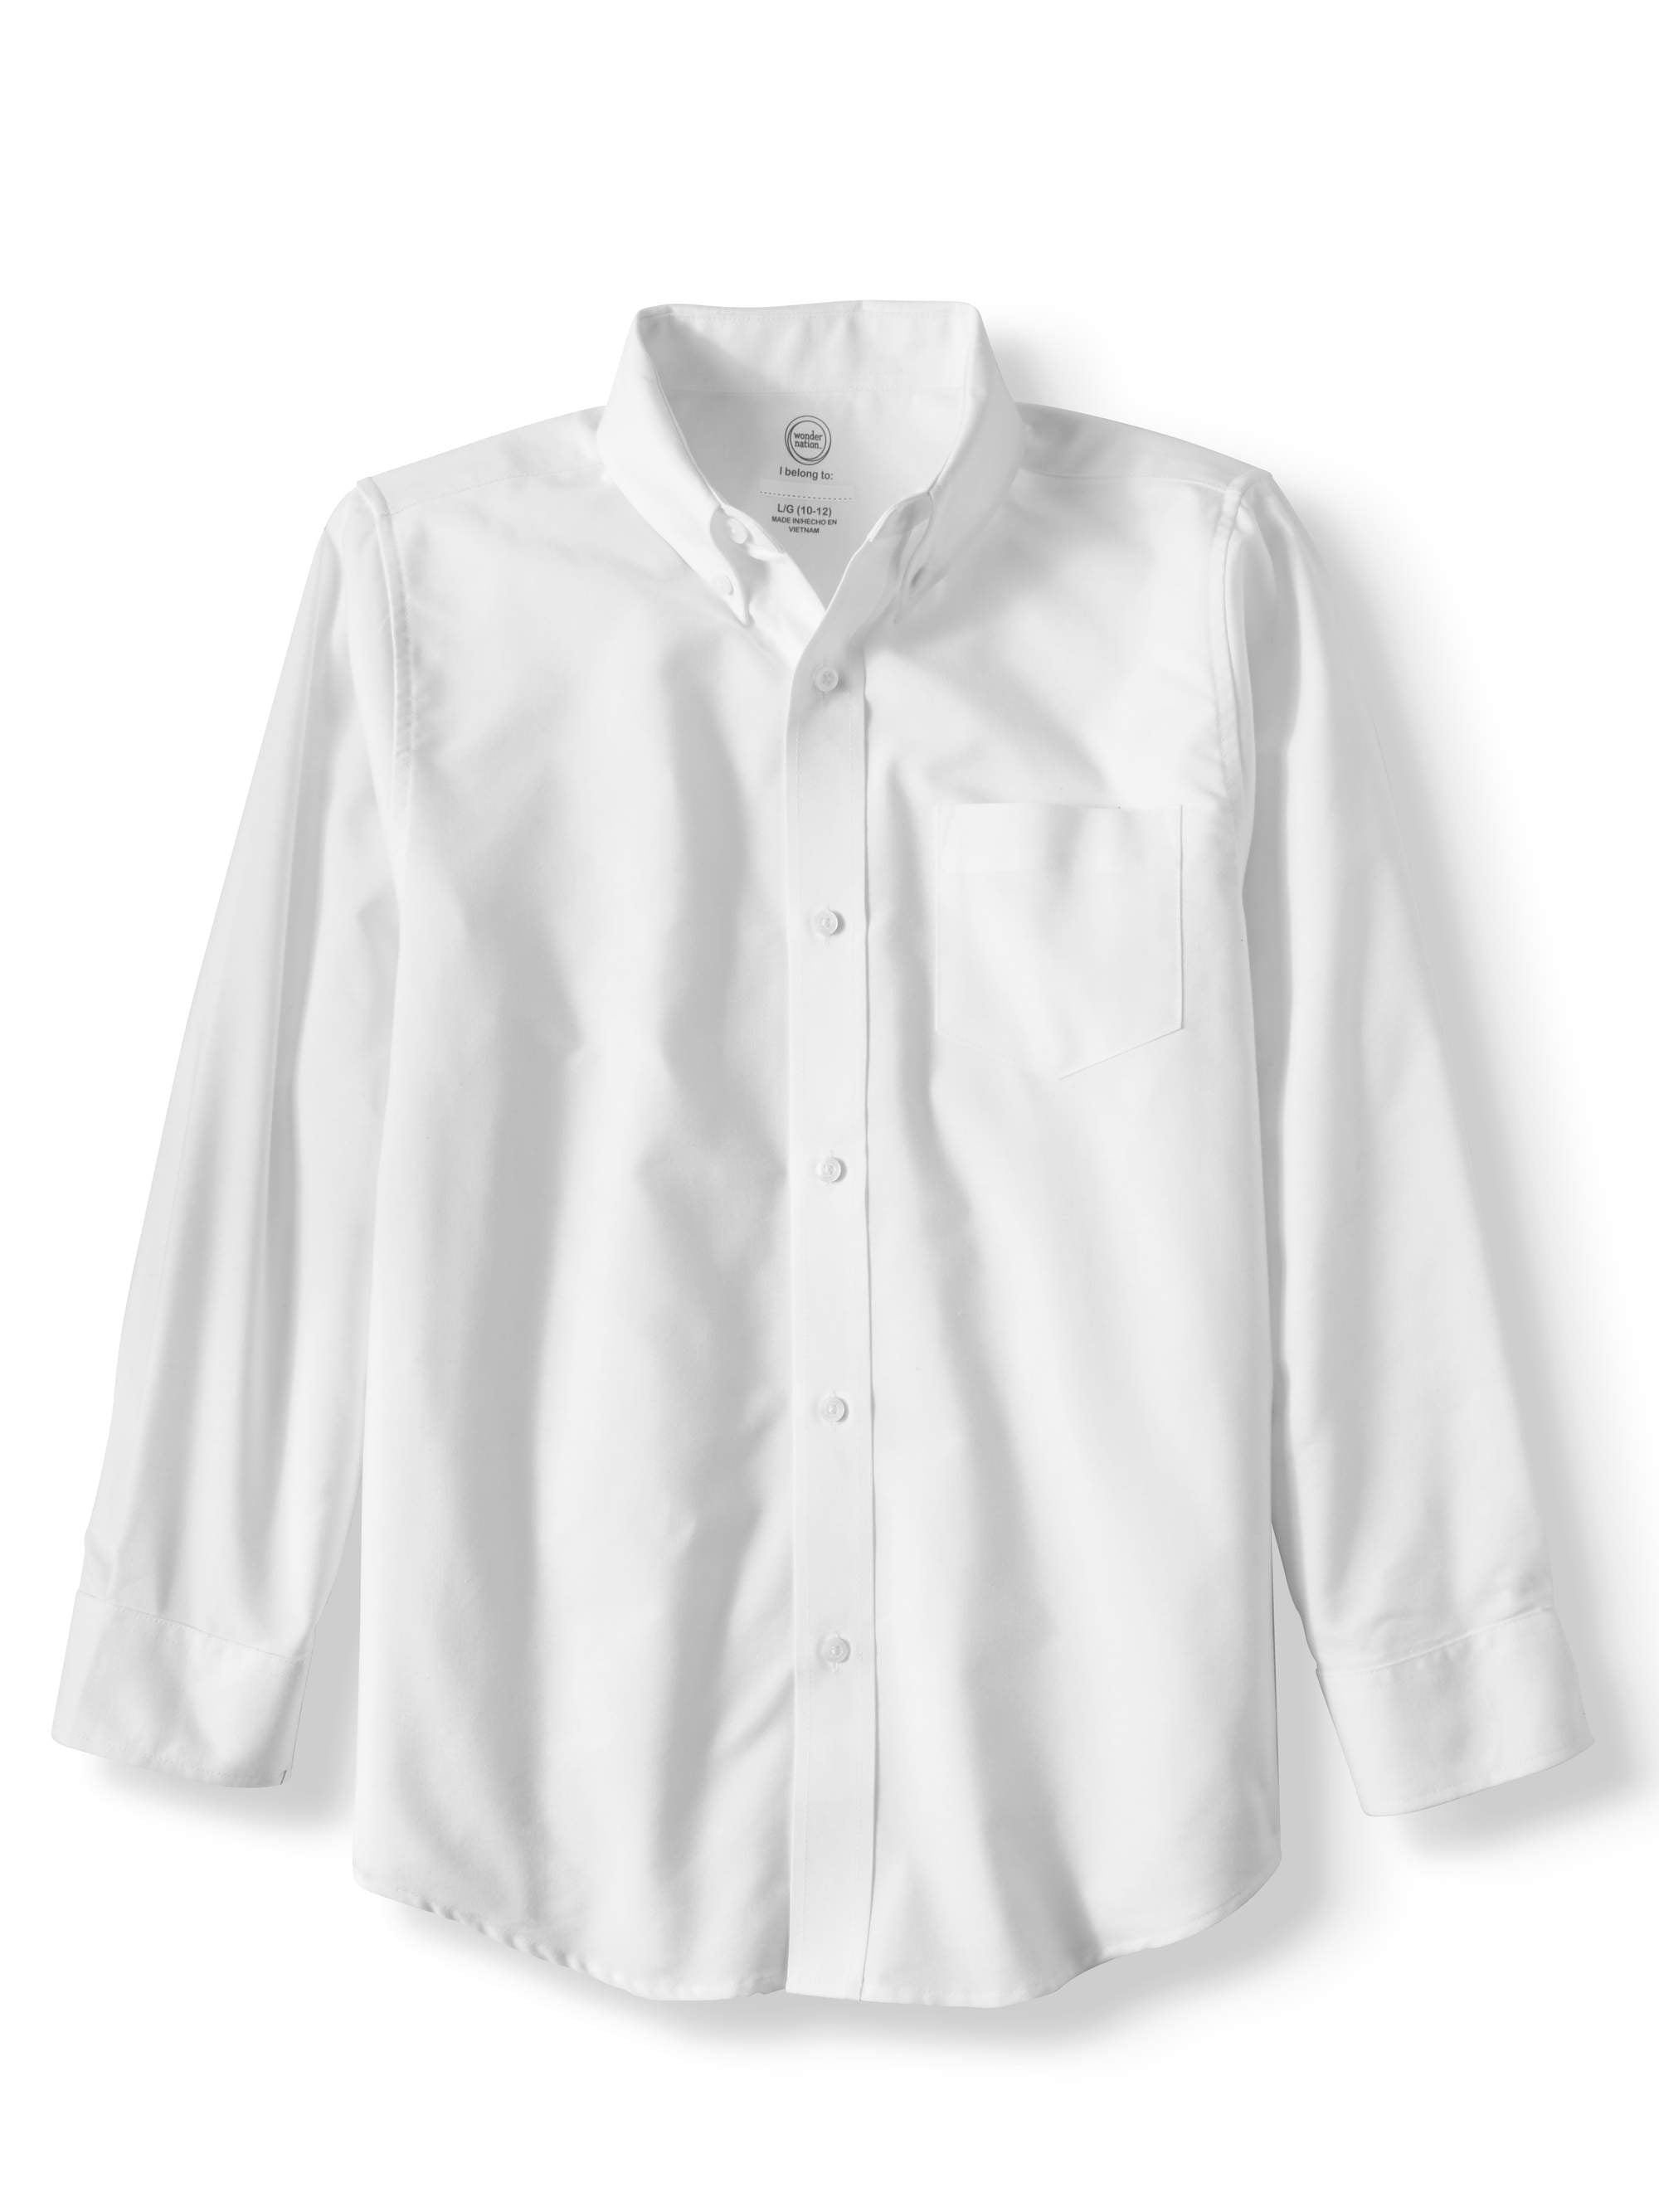 White Boys School Shirt Long Sleeve School Uniform Shirt